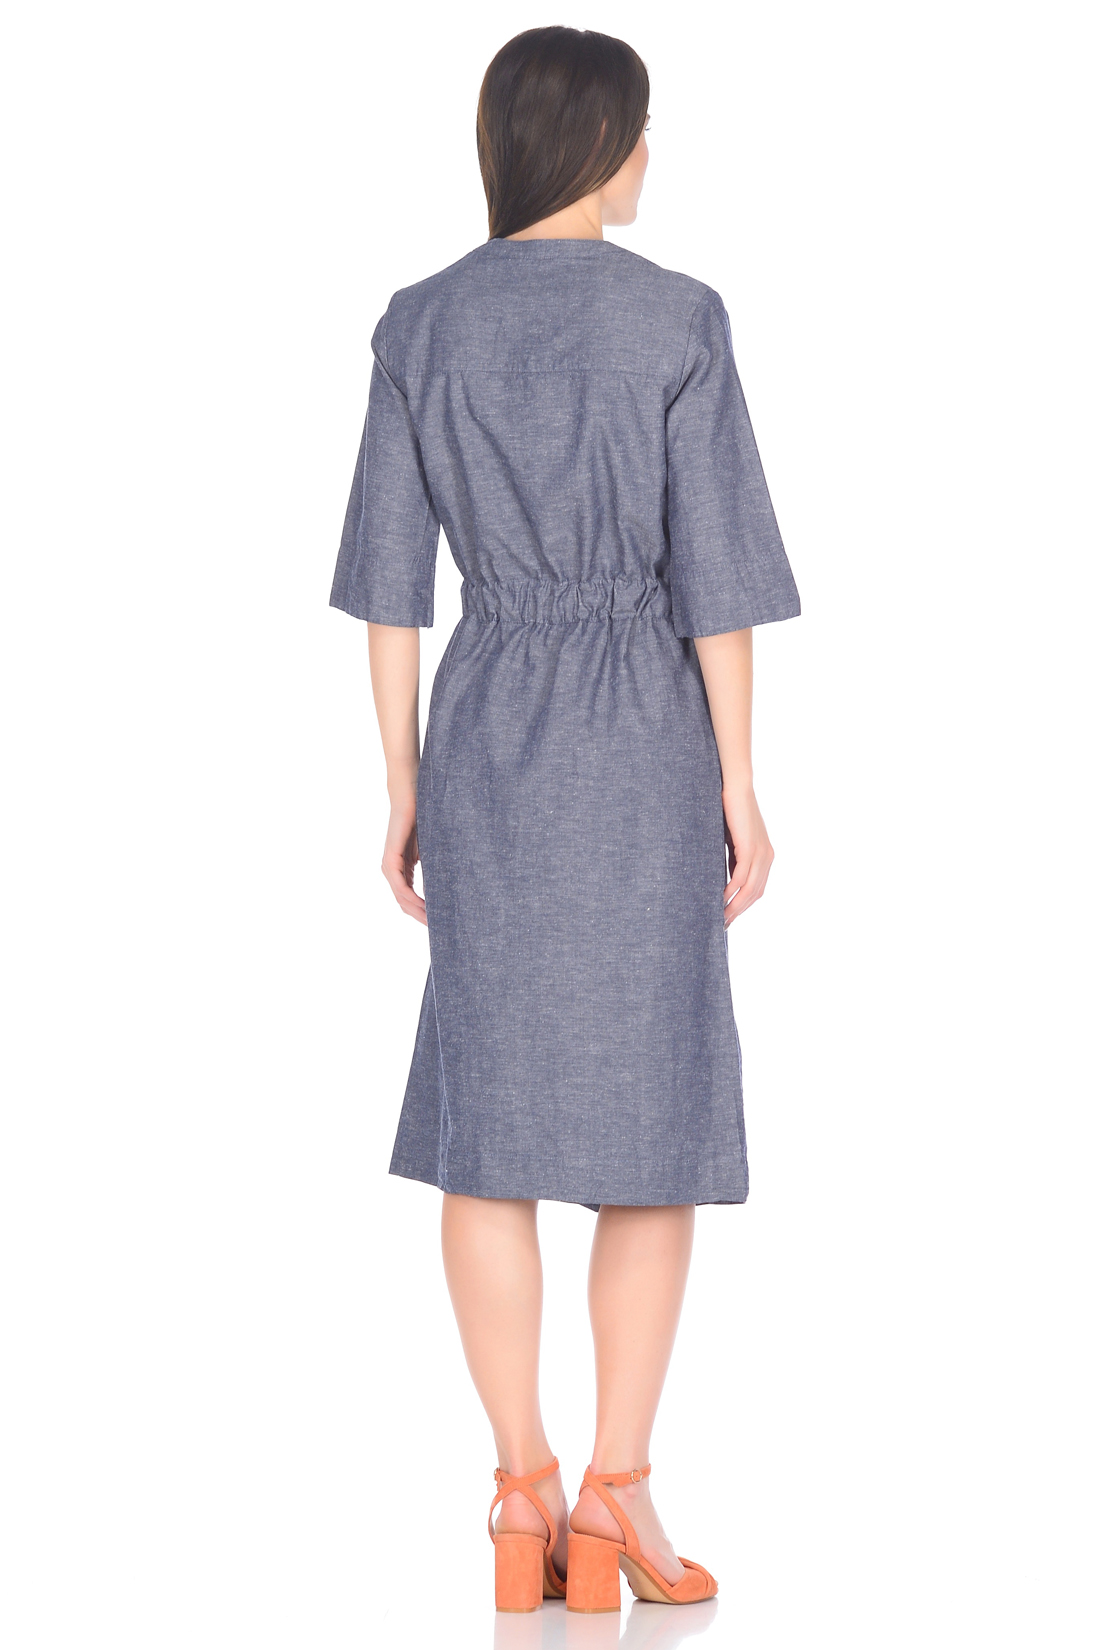 Платье-халат со льном (арт. baon B458069), размер L, цвет синий Платье-халат со льном (арт. baon B458069) - фото 2